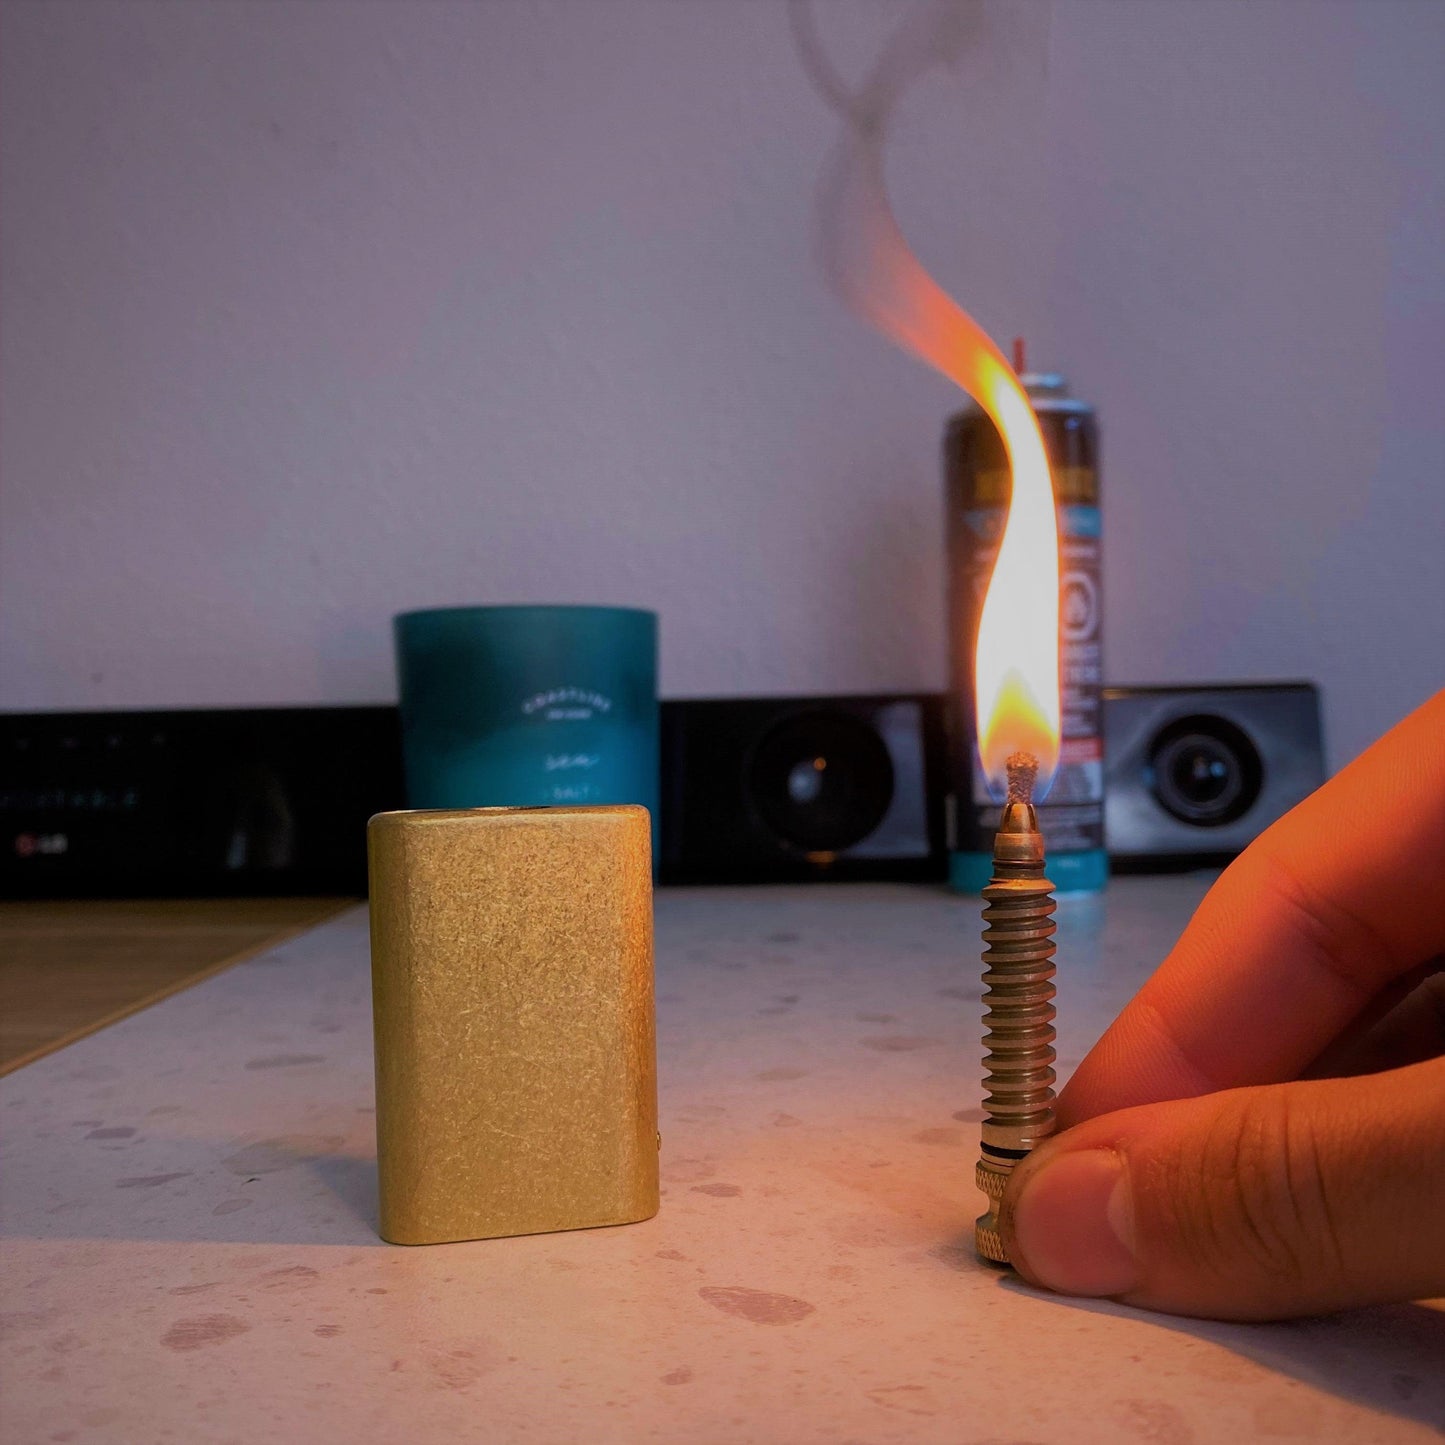 Matchstick Lighter for Easy Ignition